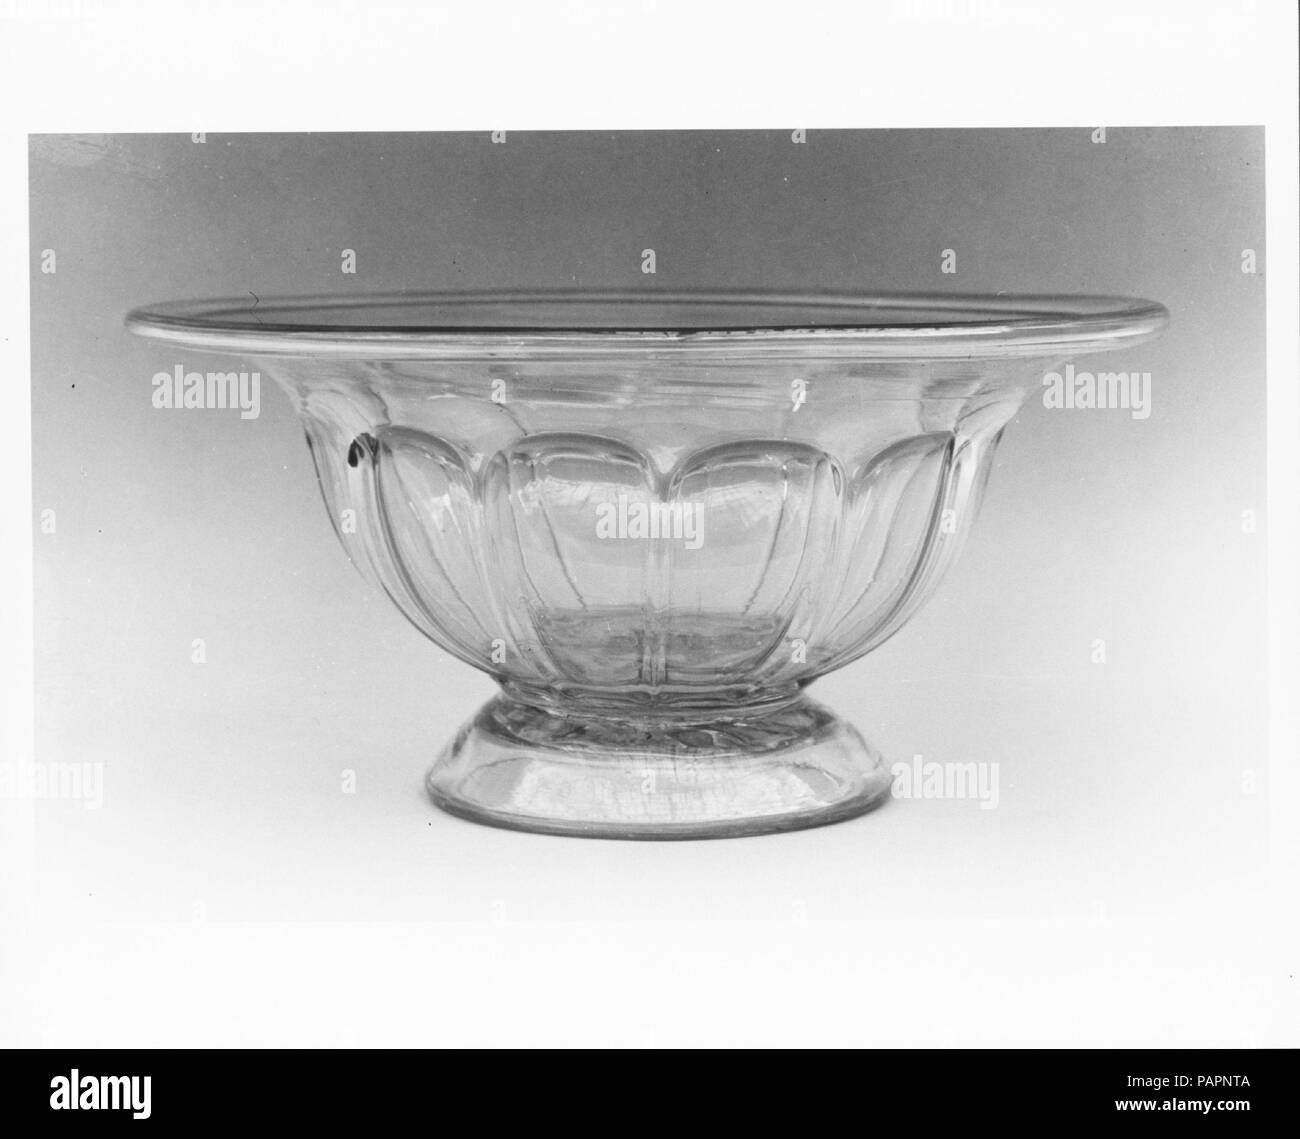 Bowl. Culture: American. Dimensions: H. 3 3/4 in. (9.5 cm); Diam. 8 7/16 in. (21.4 cm). Date: 1830-50. Museum: Metropolitan Museum of Art, New York, USA. Stock Photo